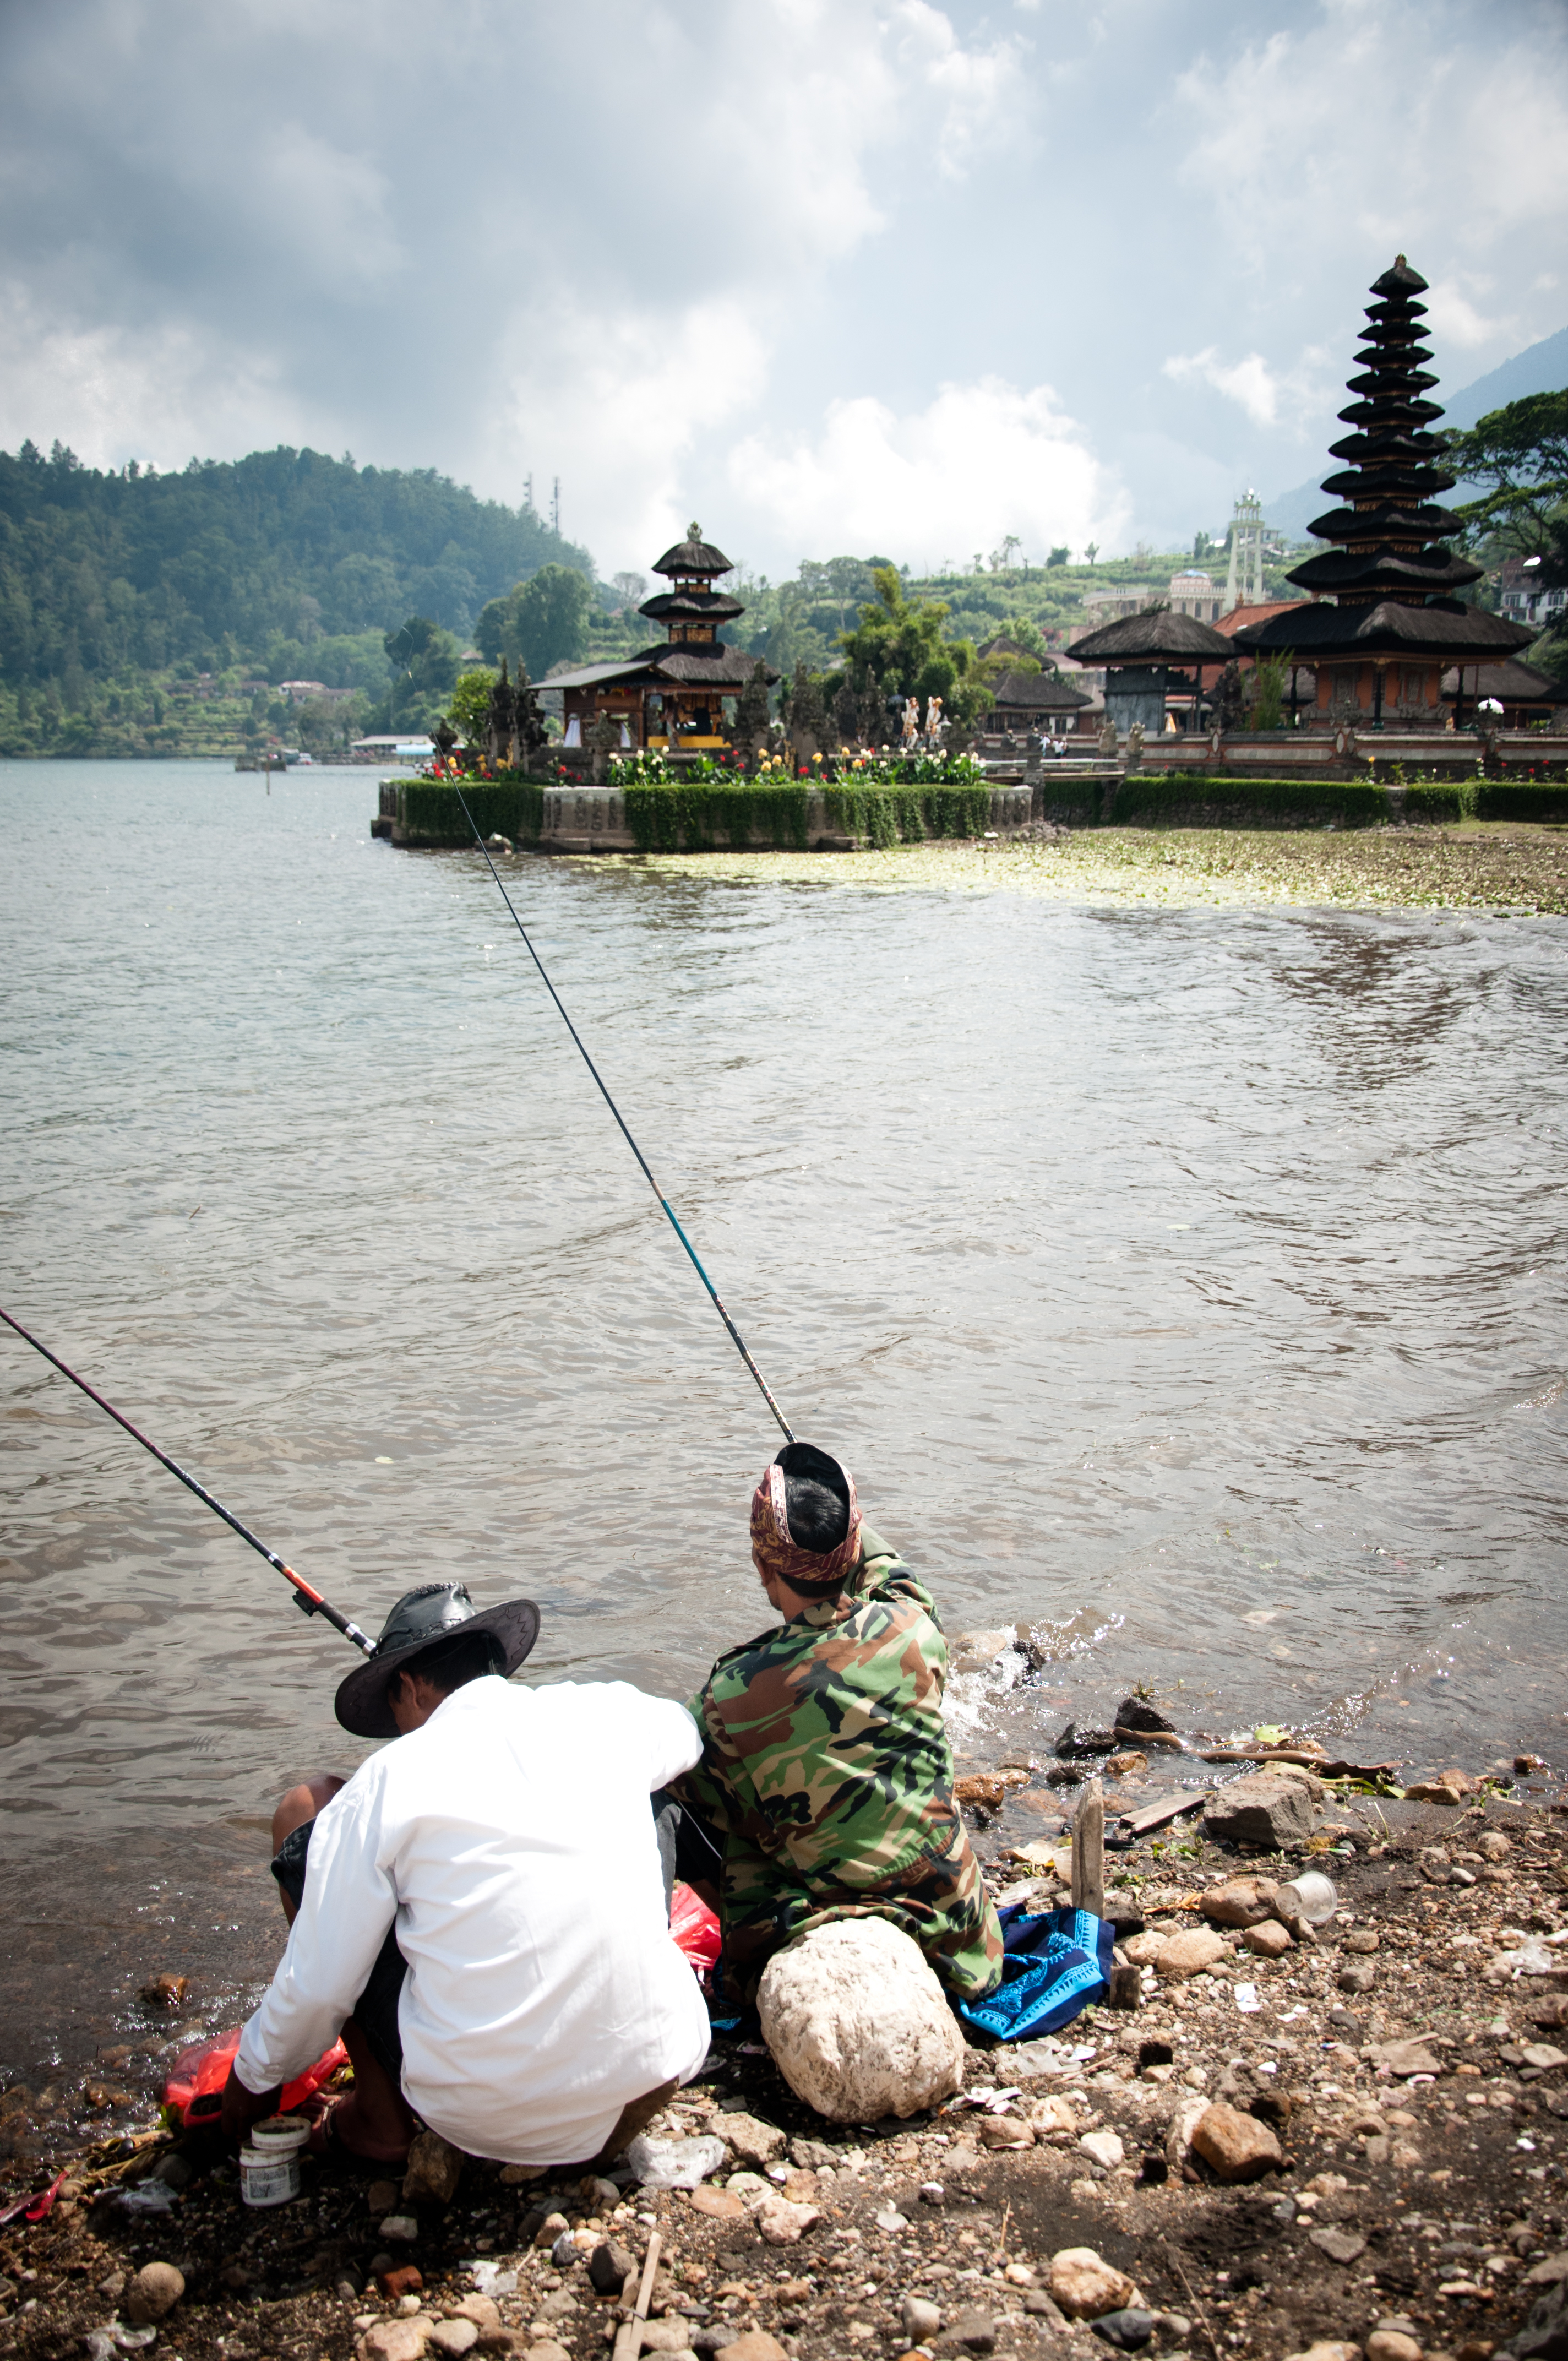 Pura ulun danu temple on a lake beratan photo